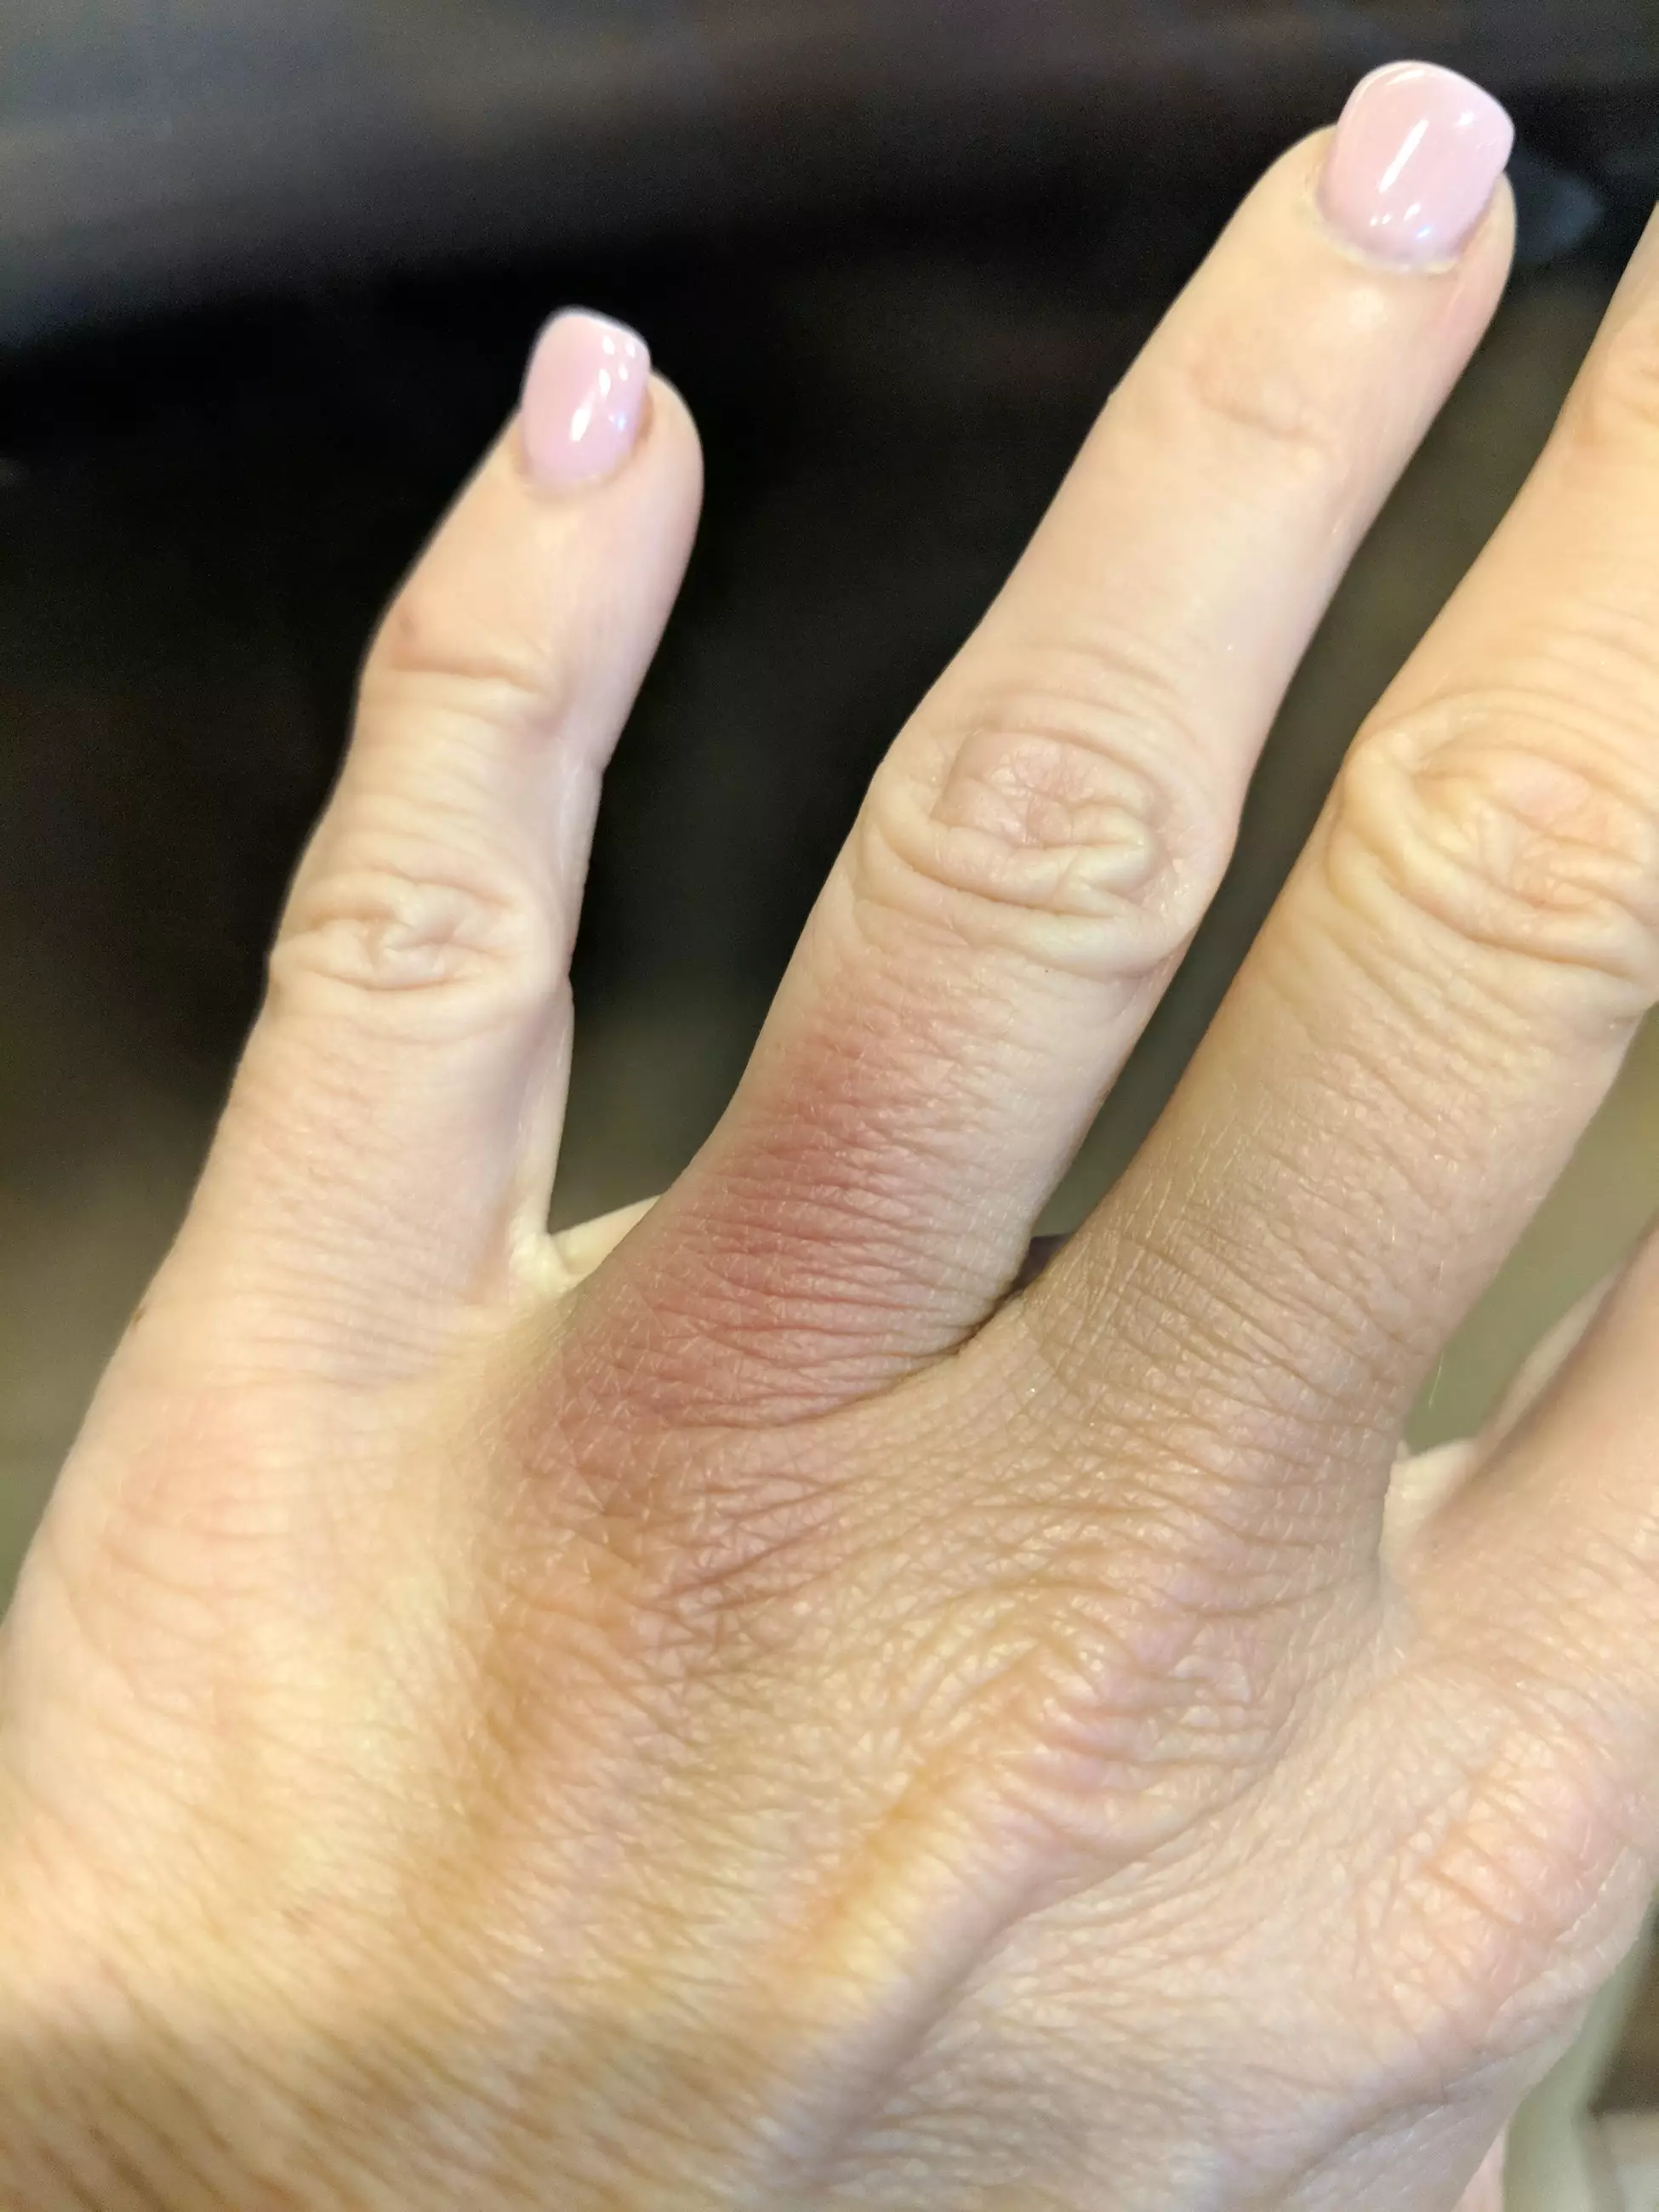 Melissa still doesn't have feeling back in her ring finger.